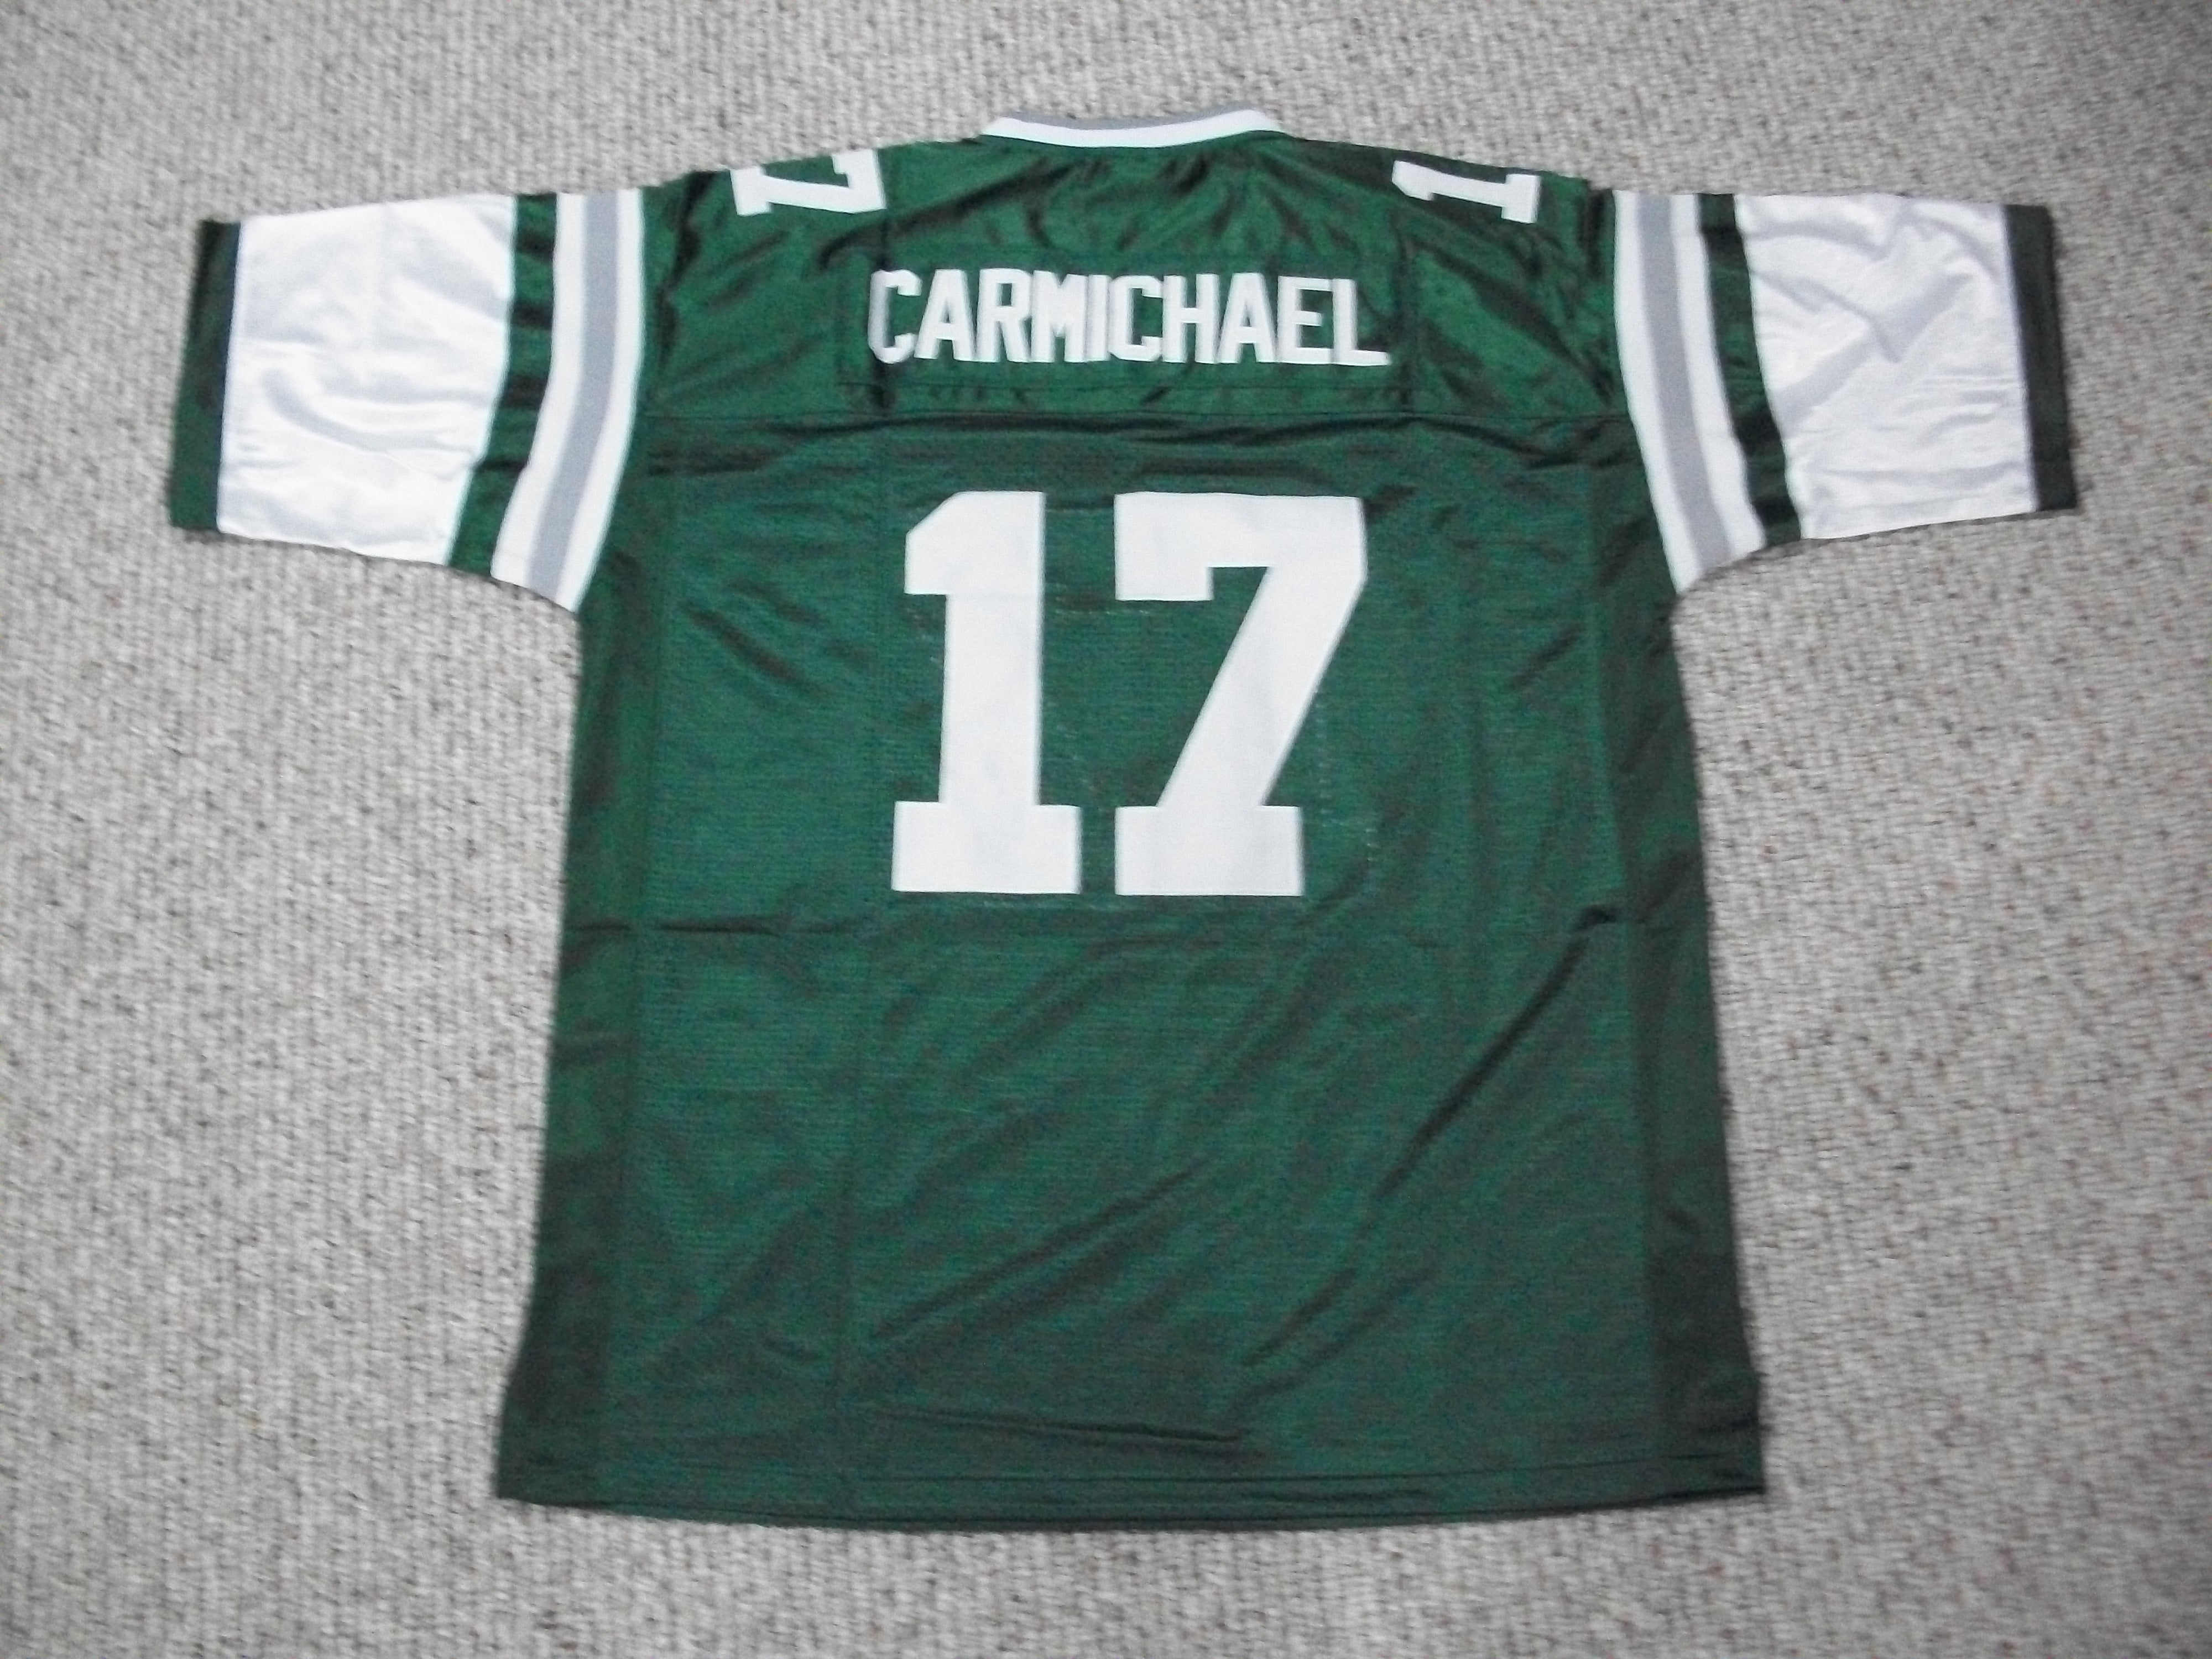 carmichael jersey